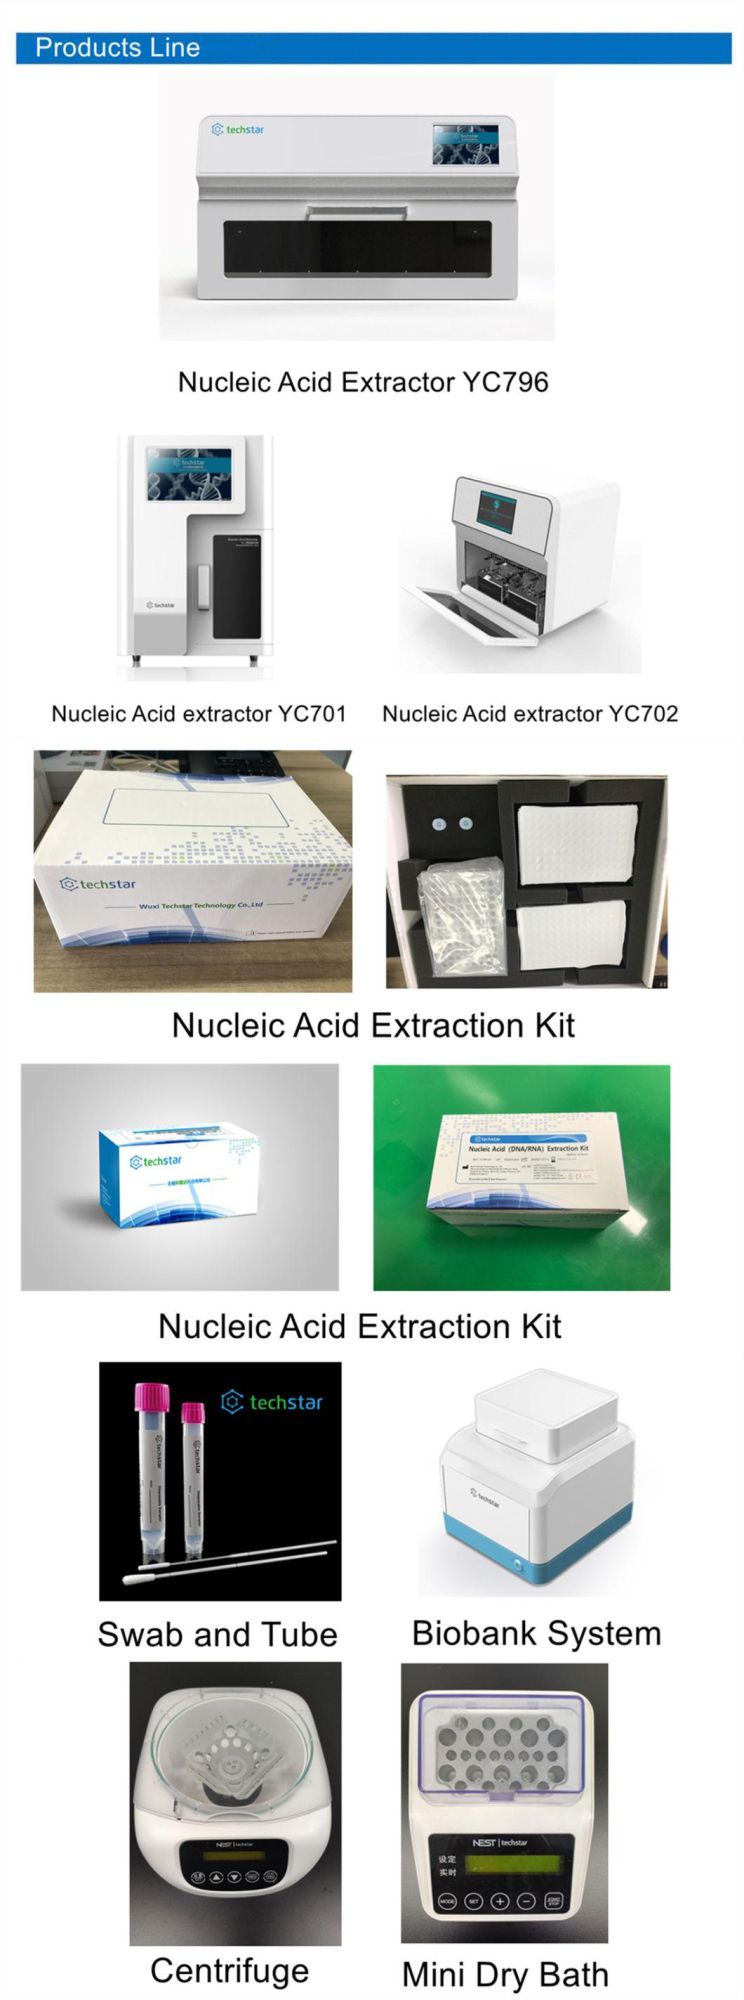 Techstar Nucleic Acid DNA/Rna Purification Kit SC905-96